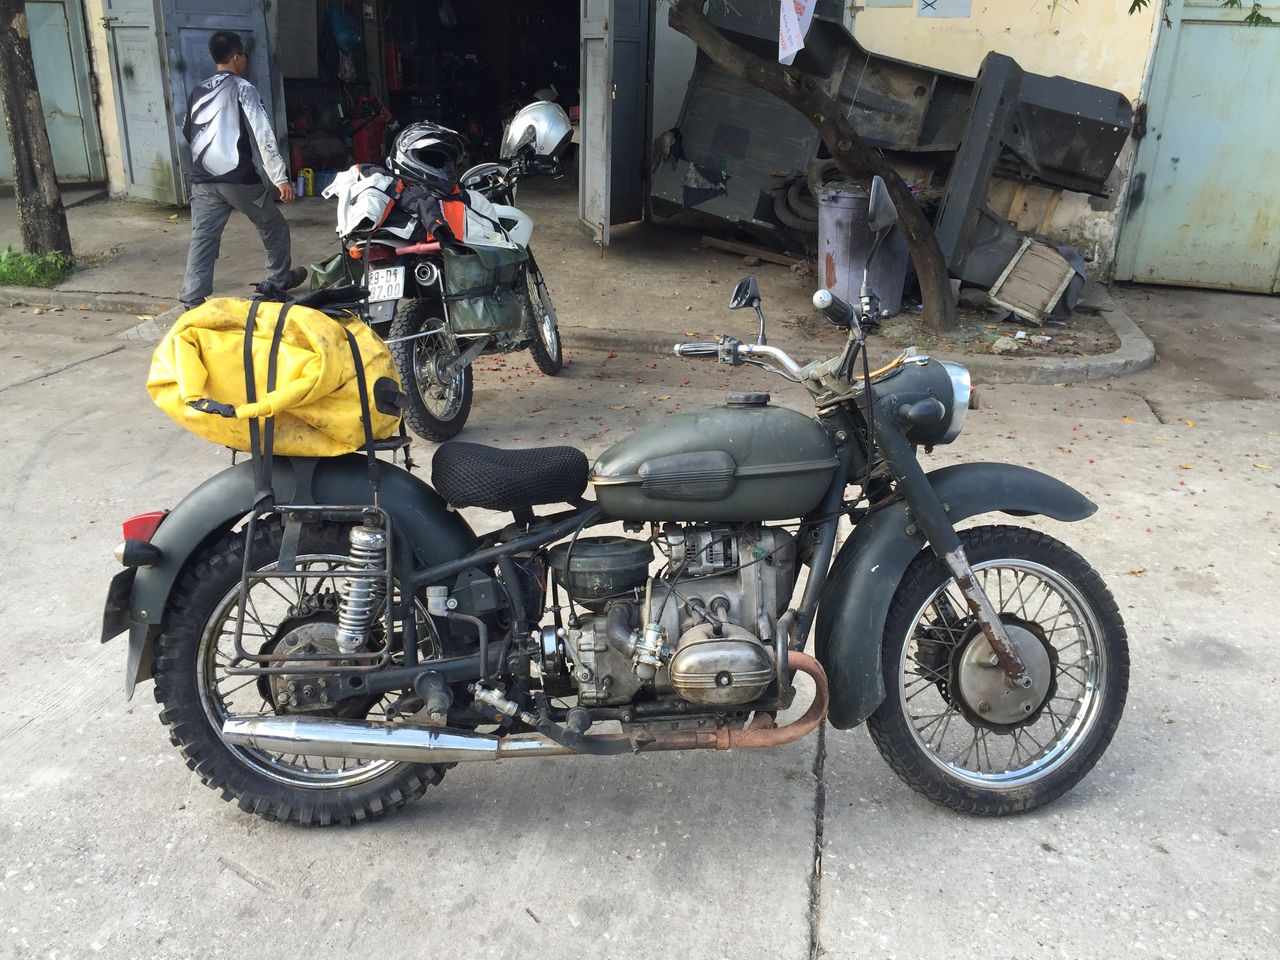 Cuong's motorbike adventure 